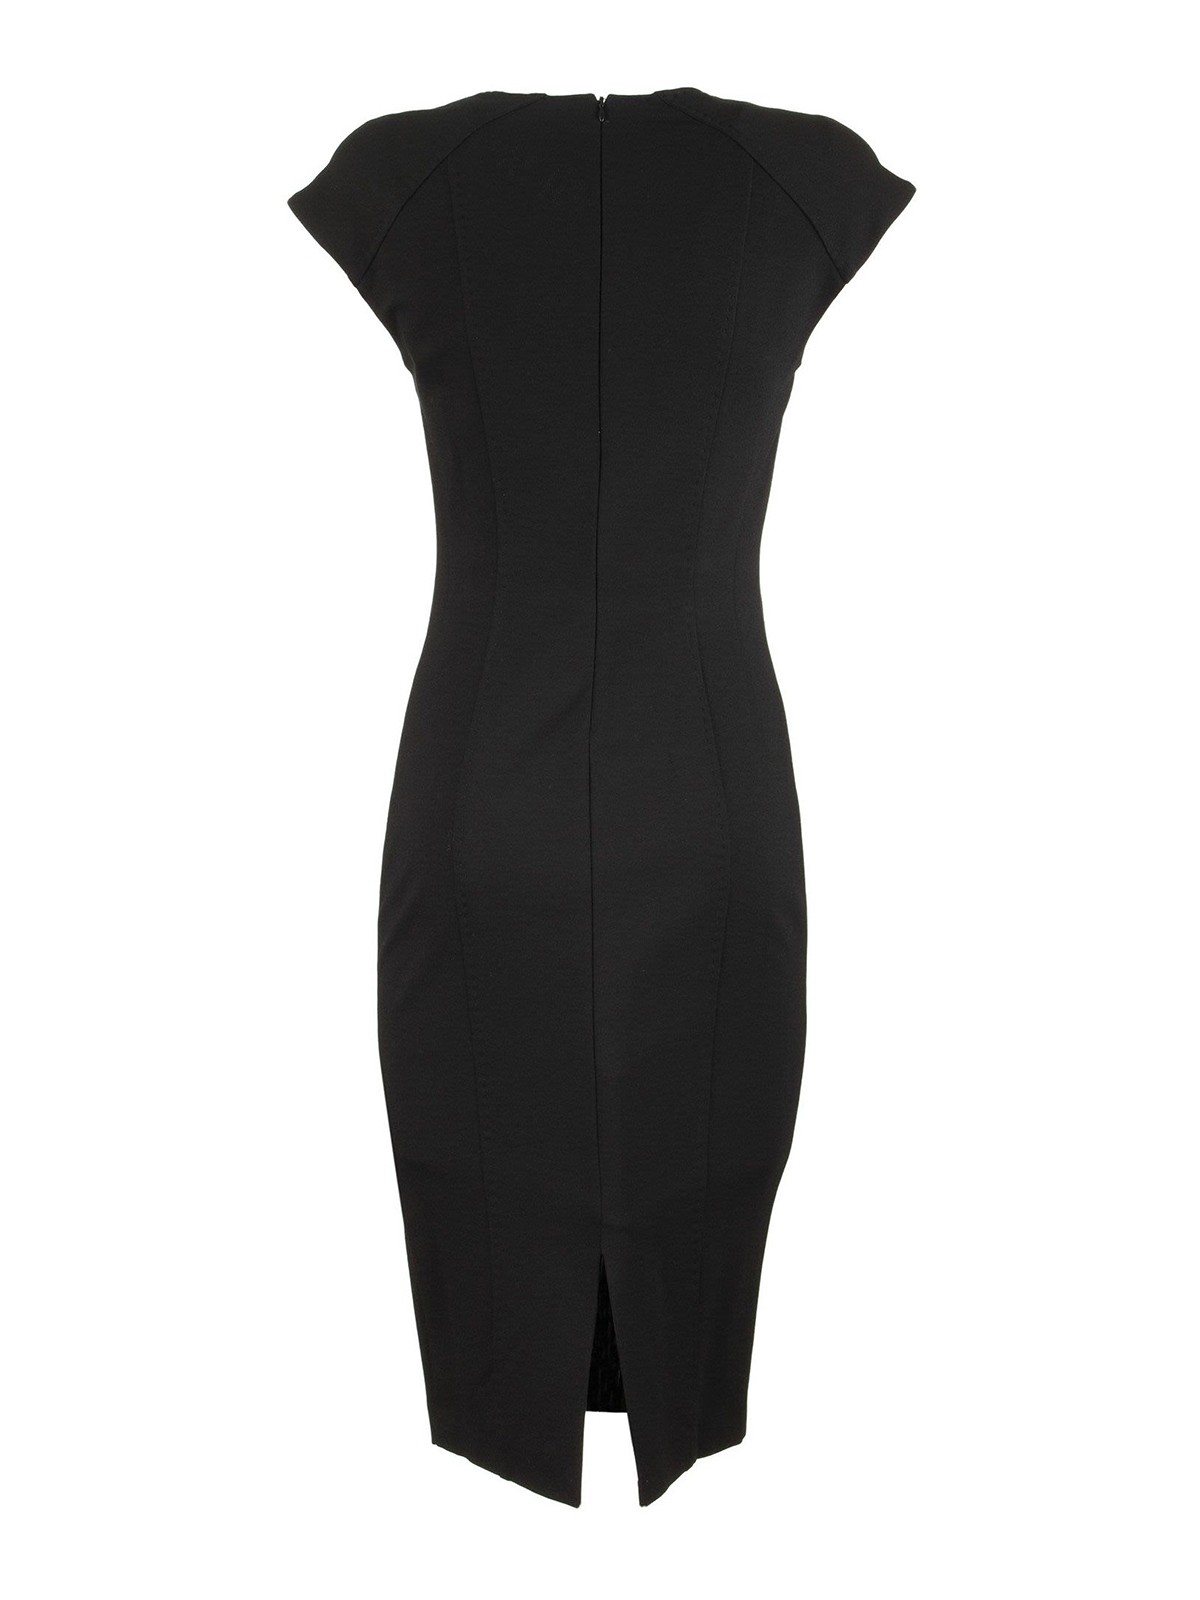 vergroting Glimp Razernij Knee length dresses Max Mara - Bobbio viscose jersey dress - 66260309600001